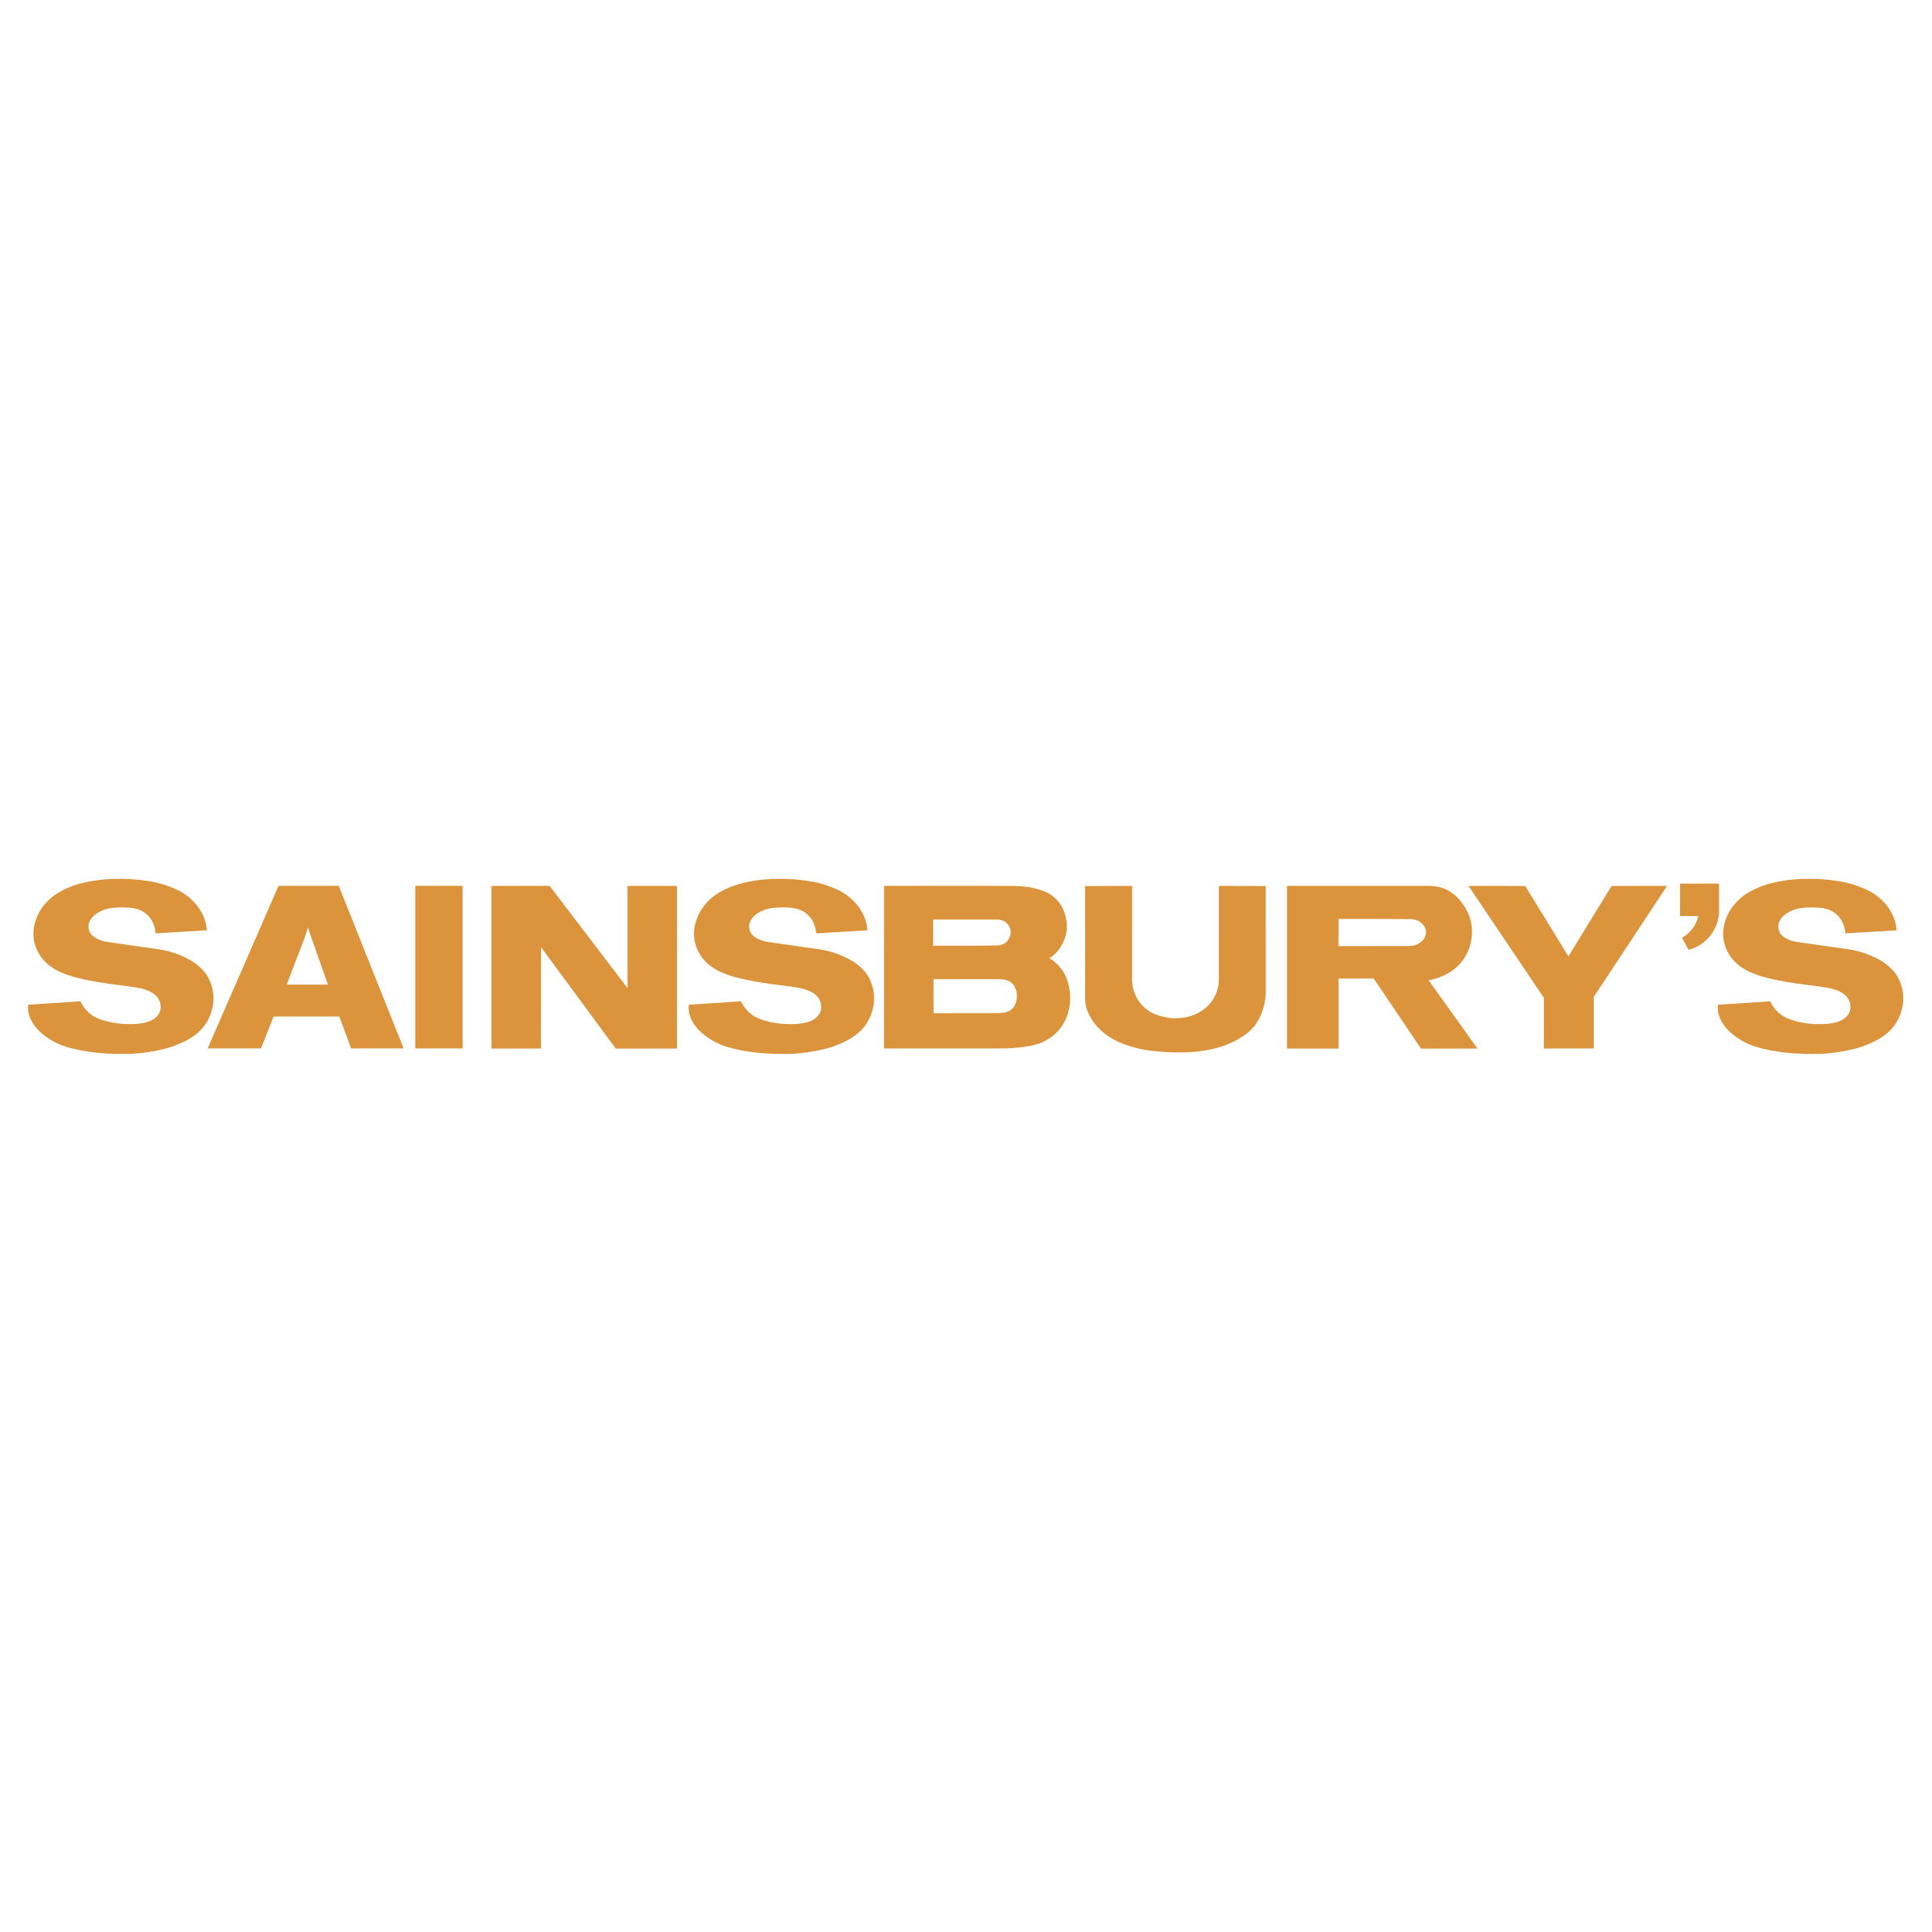 Sainsbury's Logo - Sainsbury's Logo PNG Transparent & SVG Vector - Freebie Supply